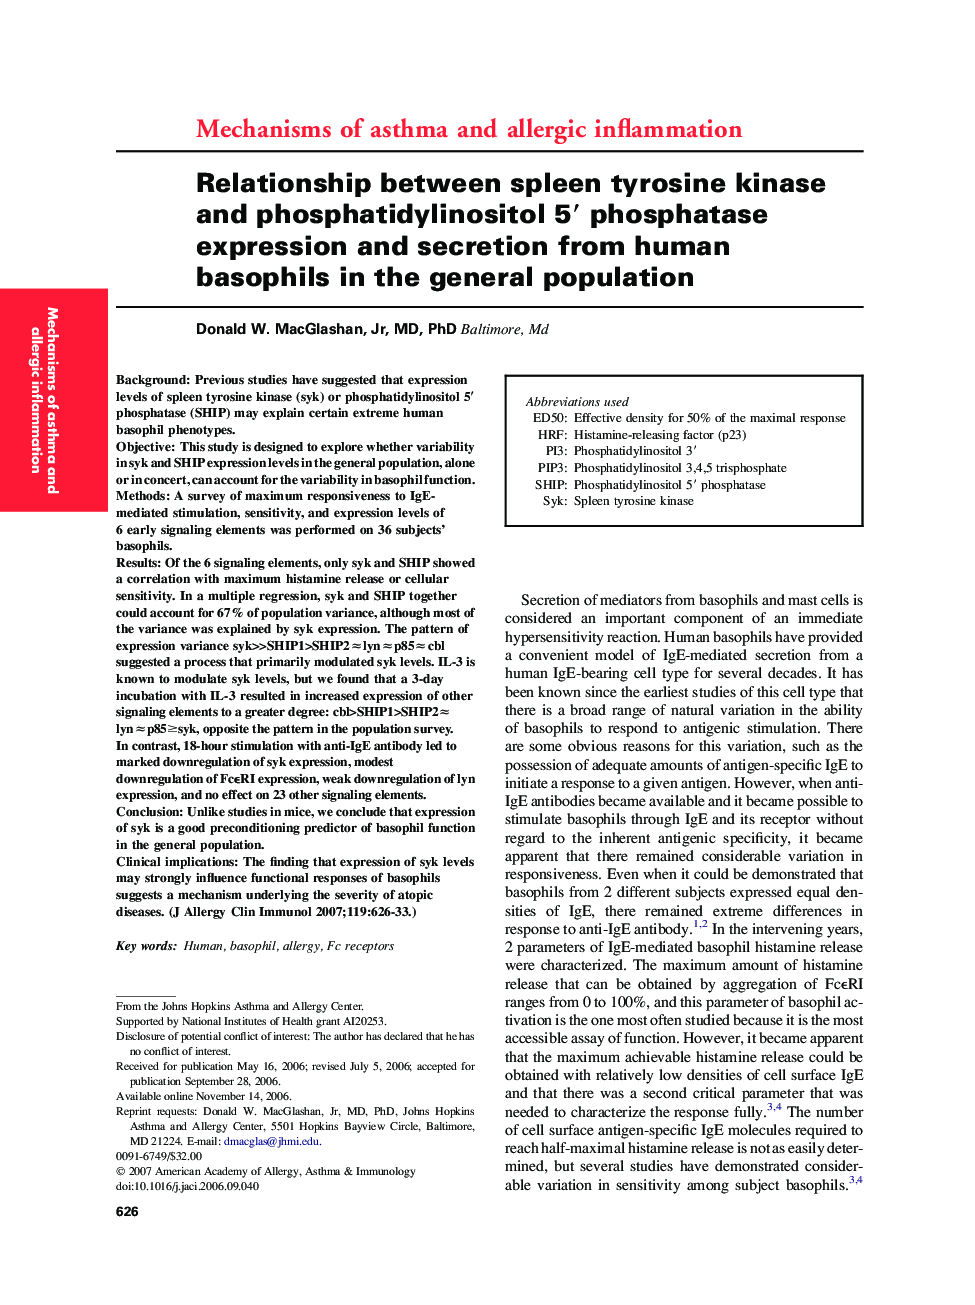 Relationship between spleen tyrosine kinase and phosphatidylinositol 5â² phosphatase expression and secretion from human basophils in the general population